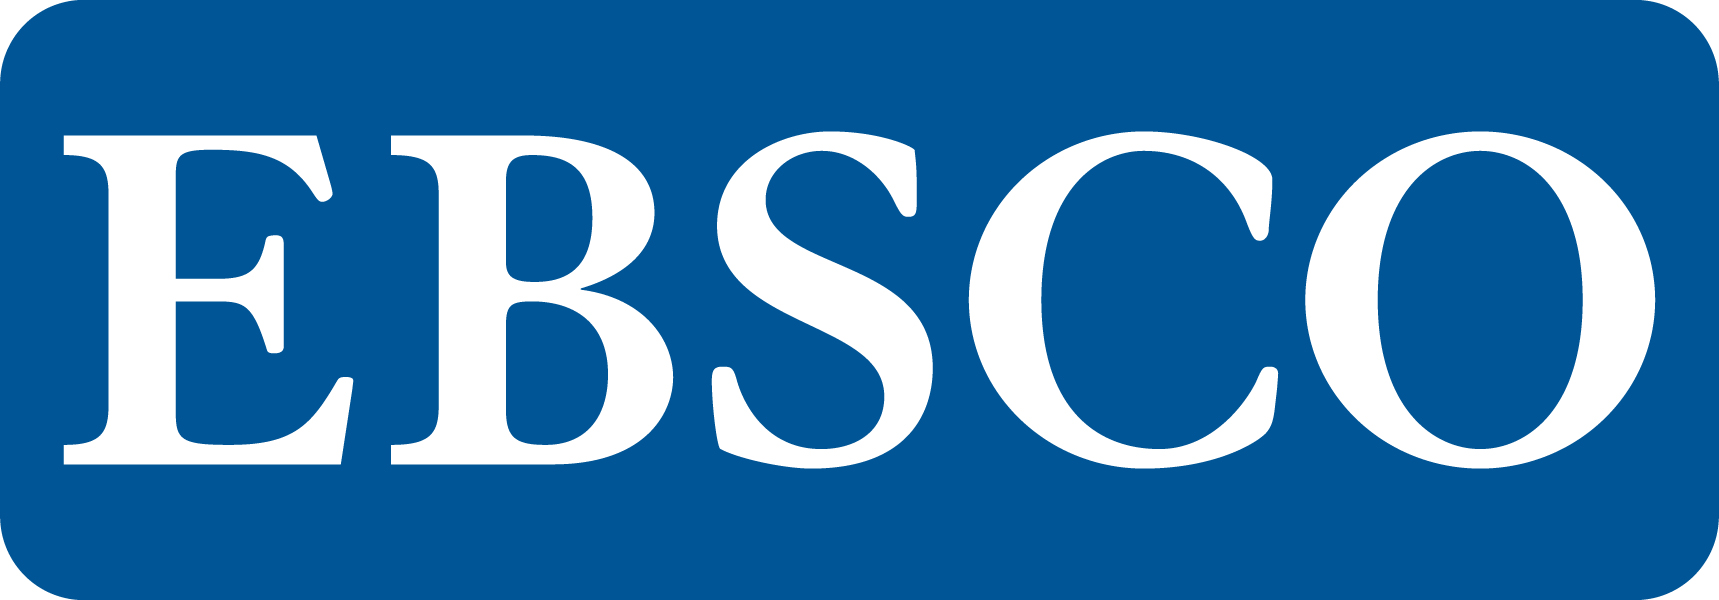 Logo 14 EBSCO